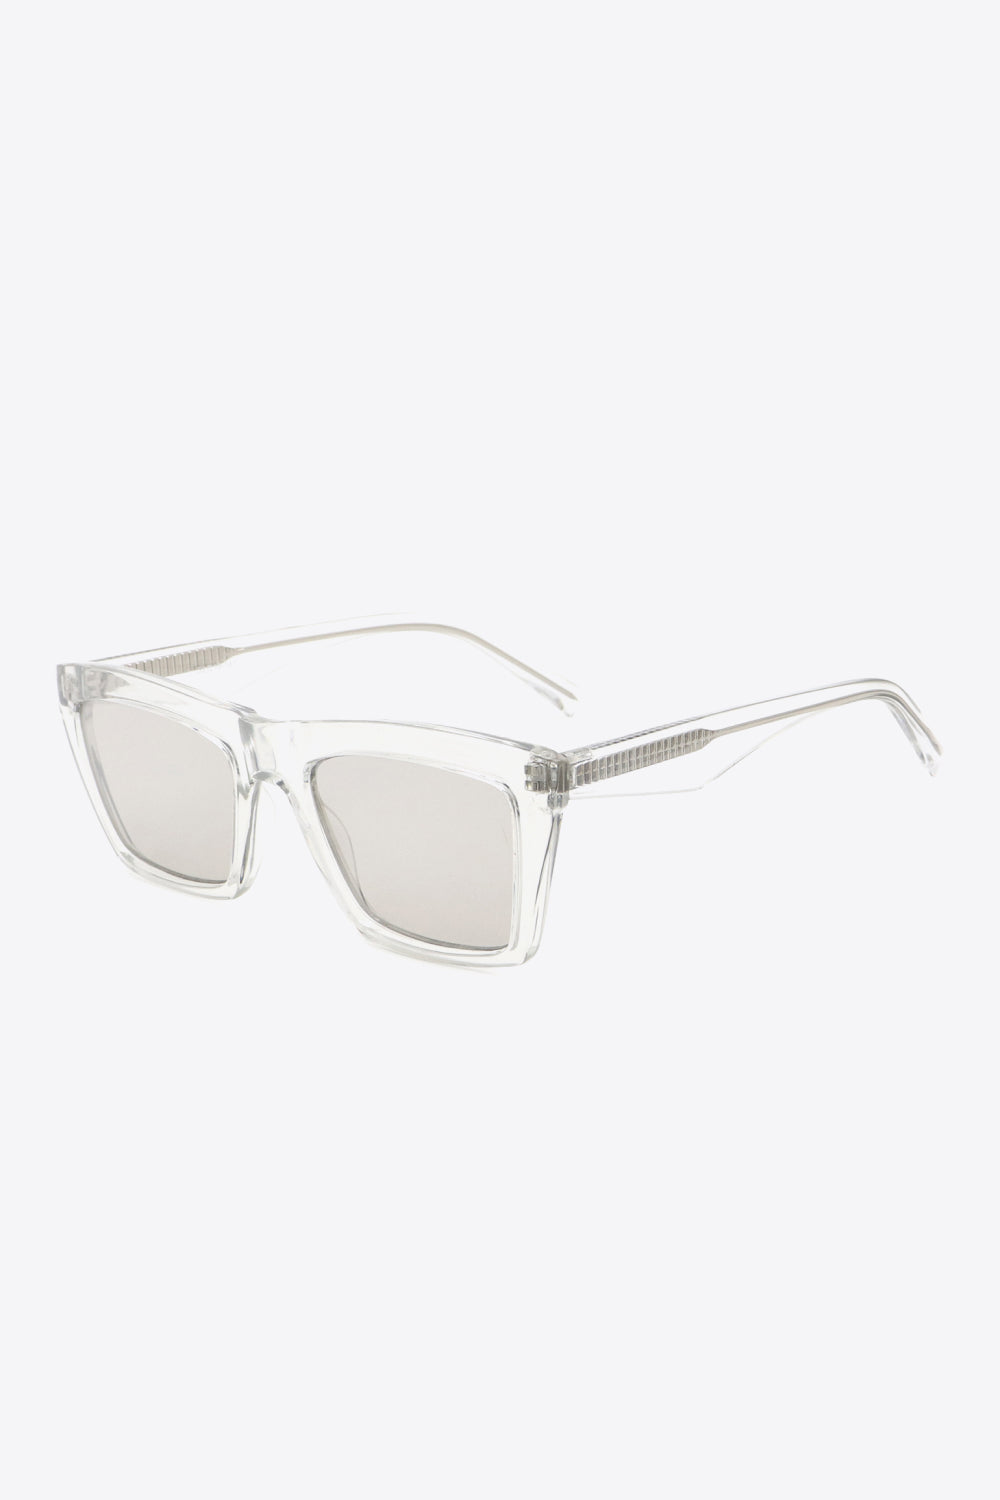 Cellulose Propionate Frame Rectangle Sunglasses - Light Gray / One Size Girl Code